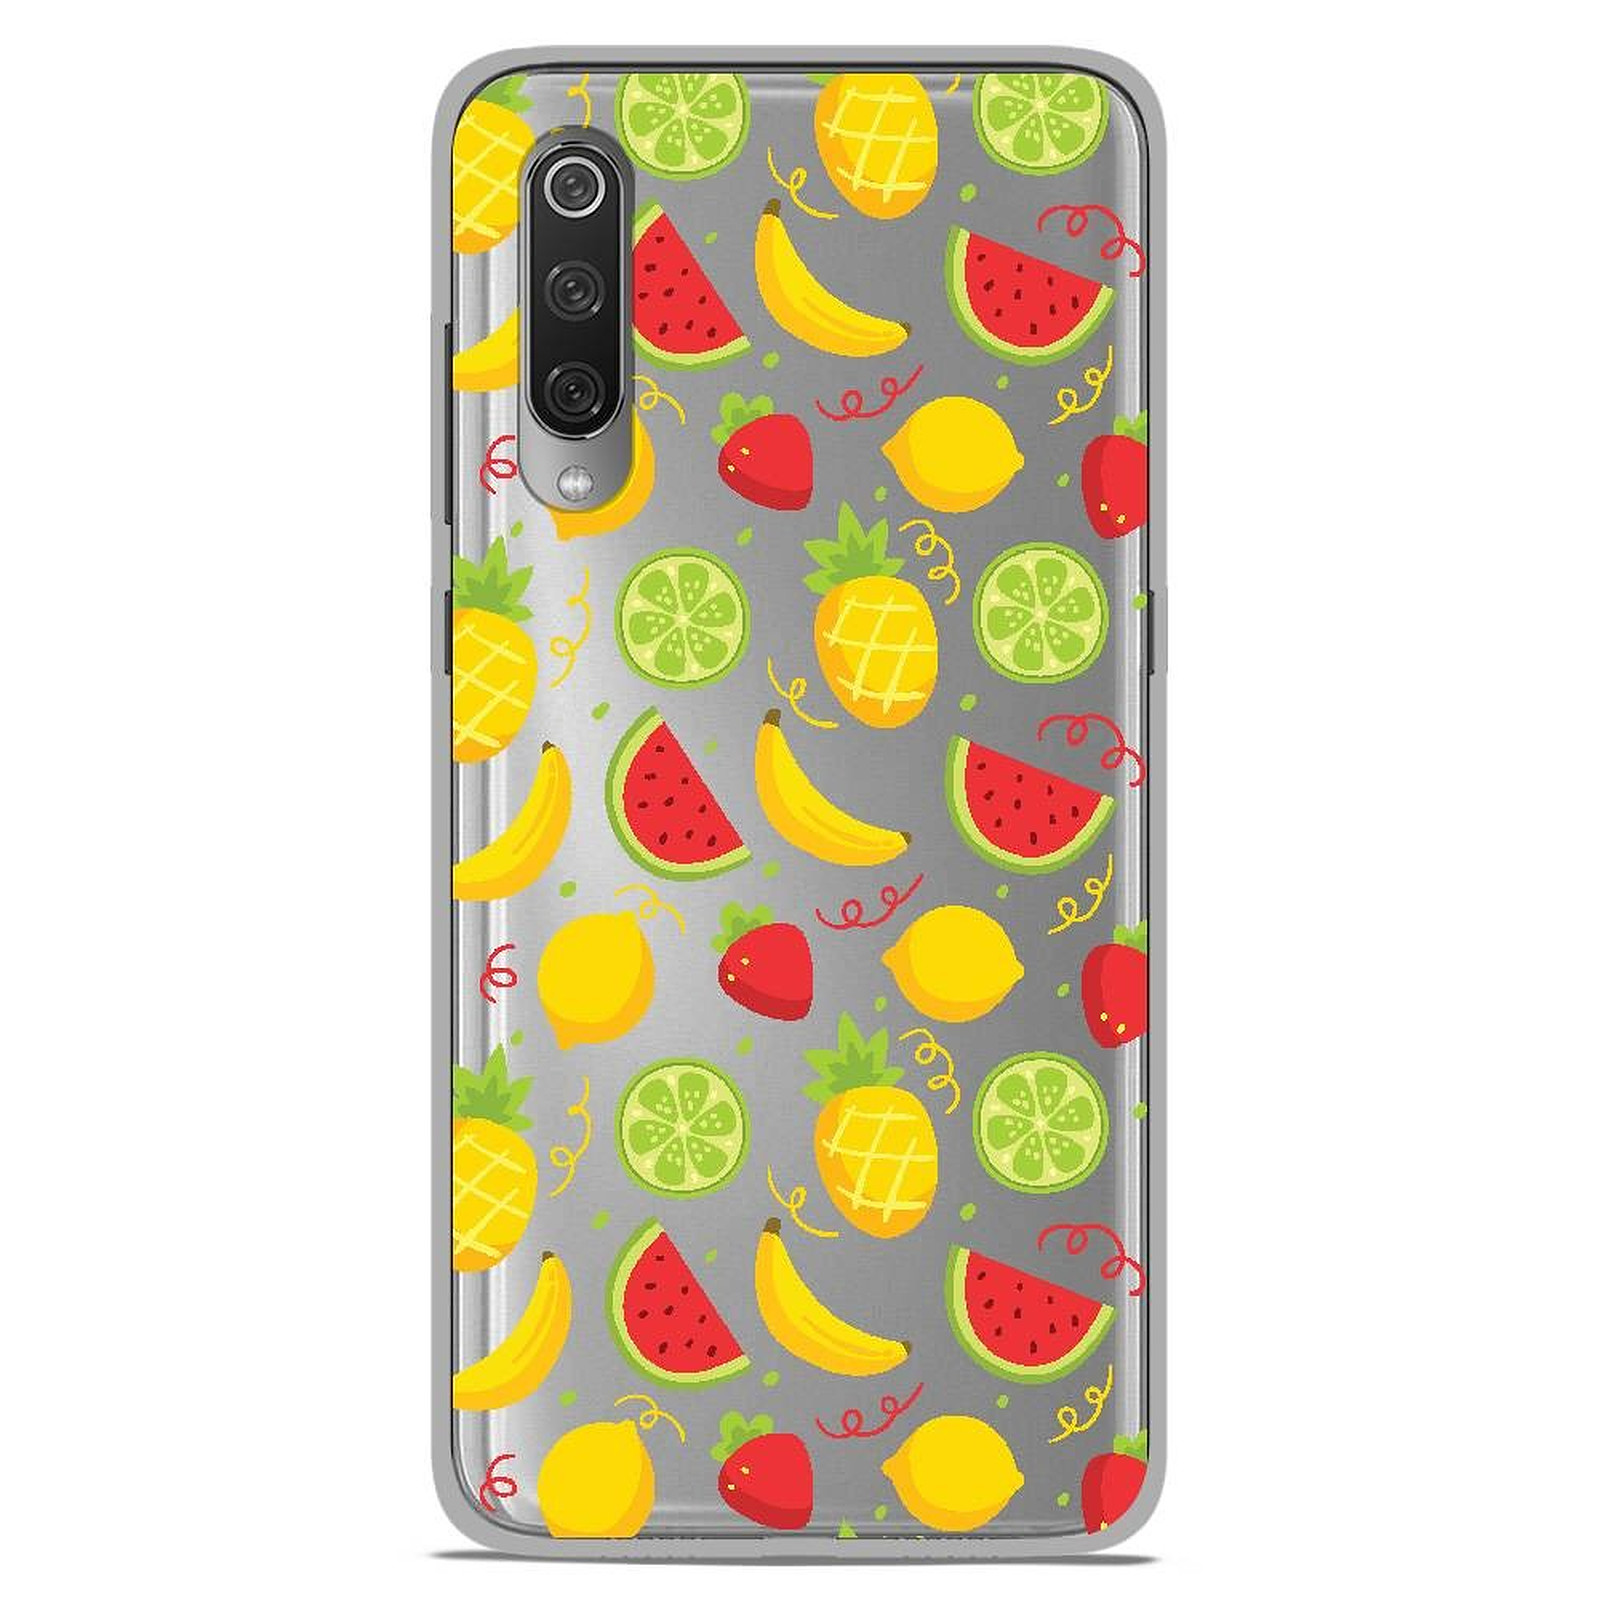 1001 Coques Coque silicone gel Xiaomi Mi 9 / Mi 9 Pro motif Fruits tropicaux - Coque telephone 1001Coques